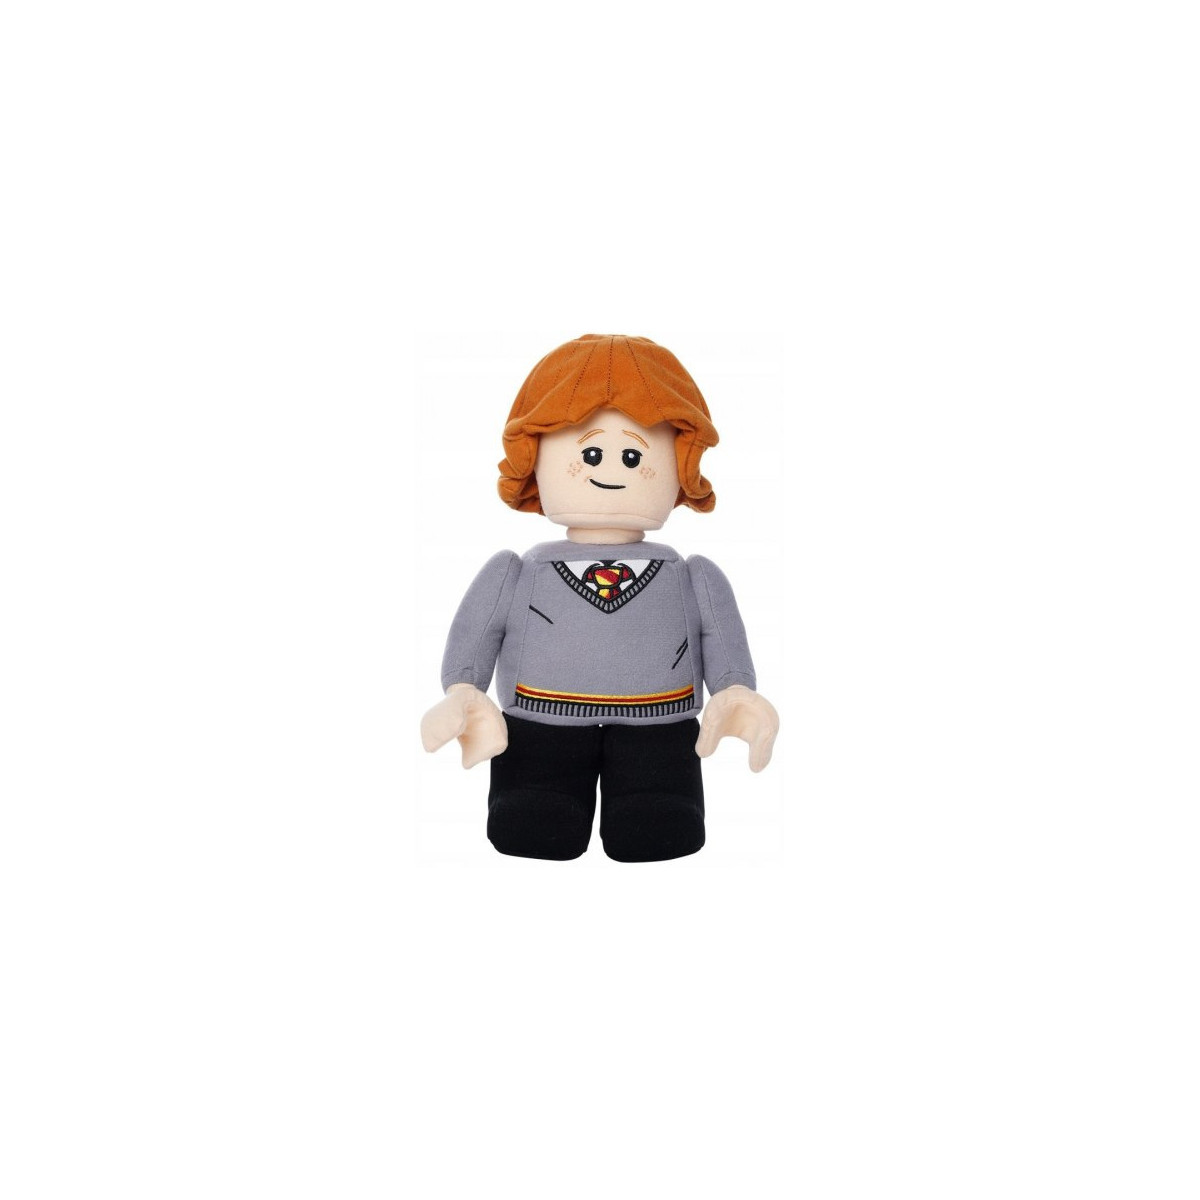 Lego 342780 - Harry Potter Ron Weasley plush